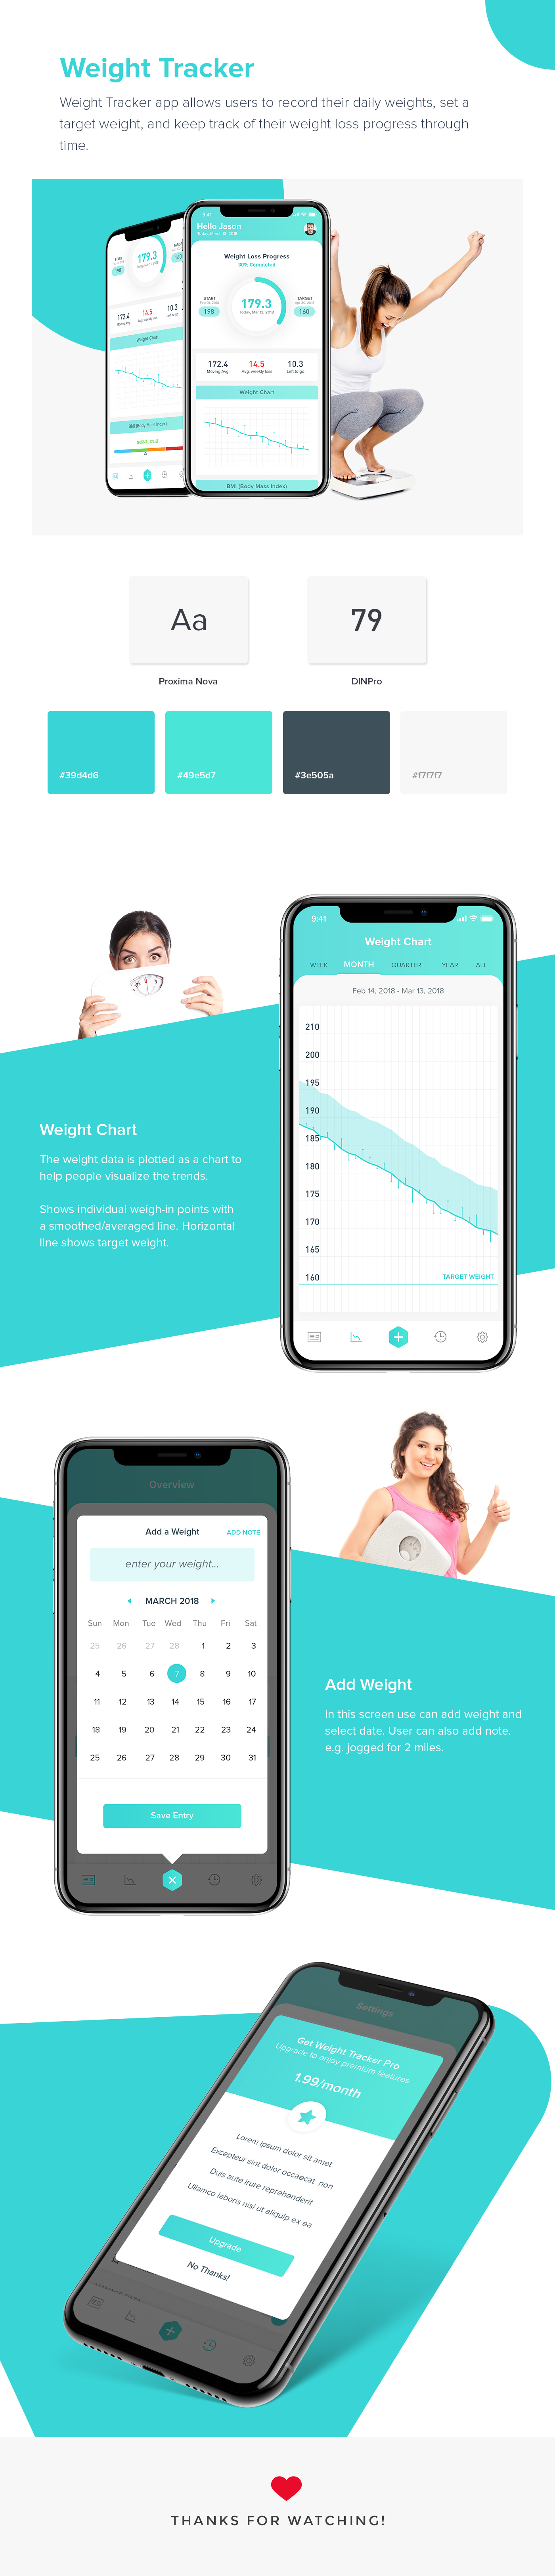 weight app Weight loss fitness app mobile app design Mobile UI ui design light theme chart design progress bar